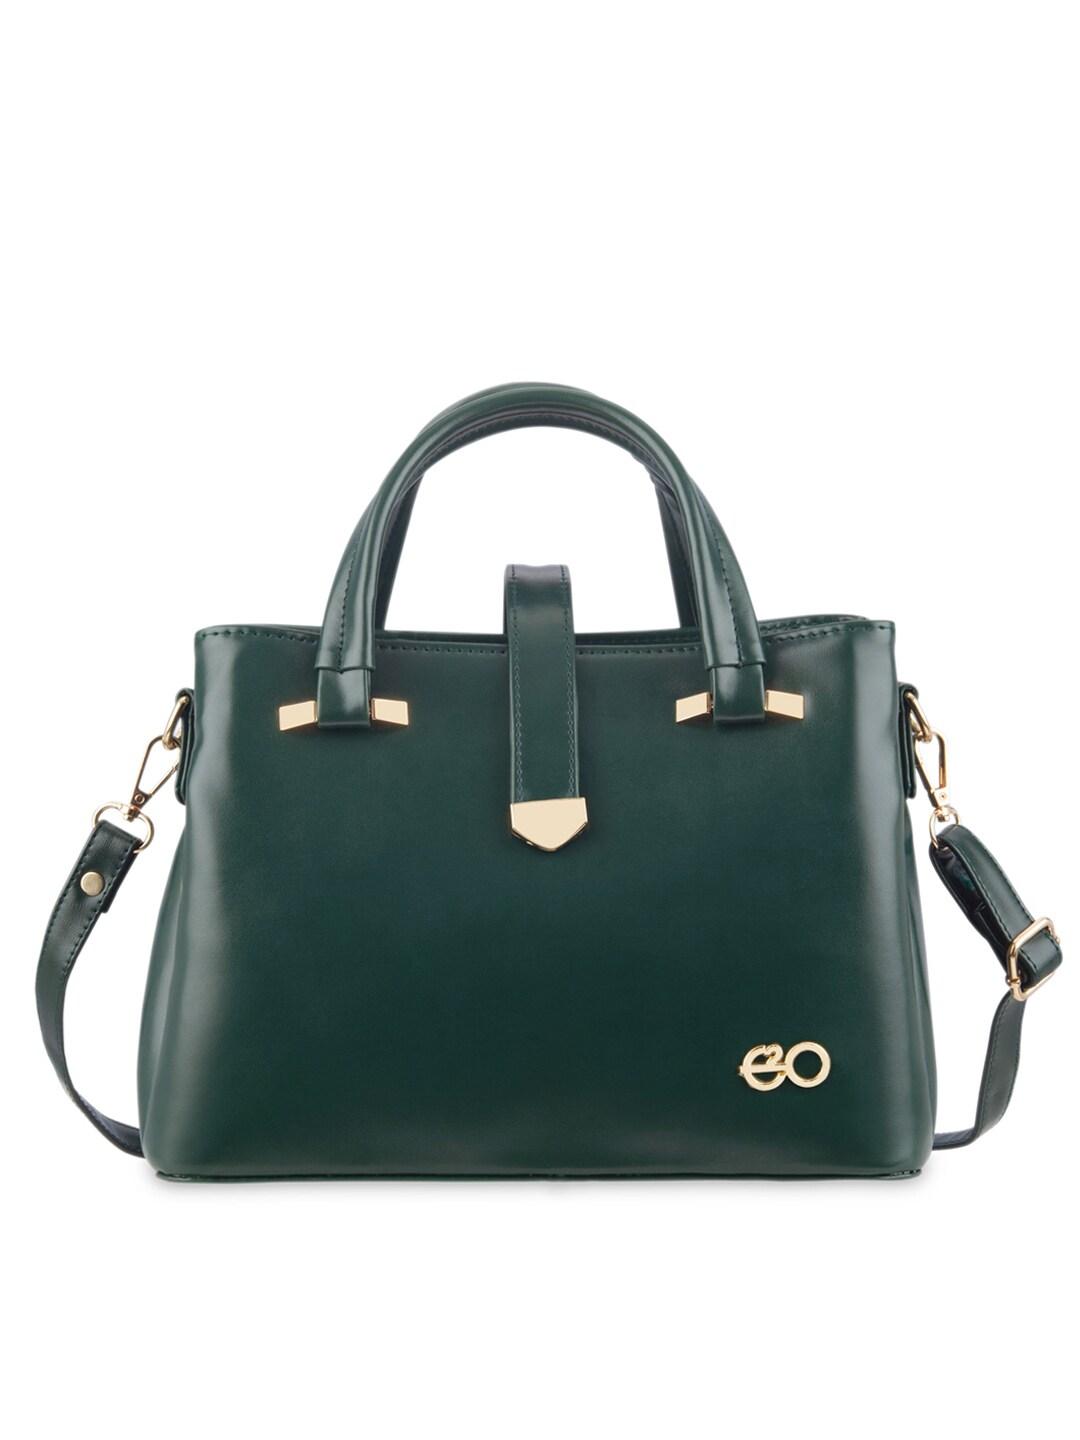 E2O Structured Handheld Bag